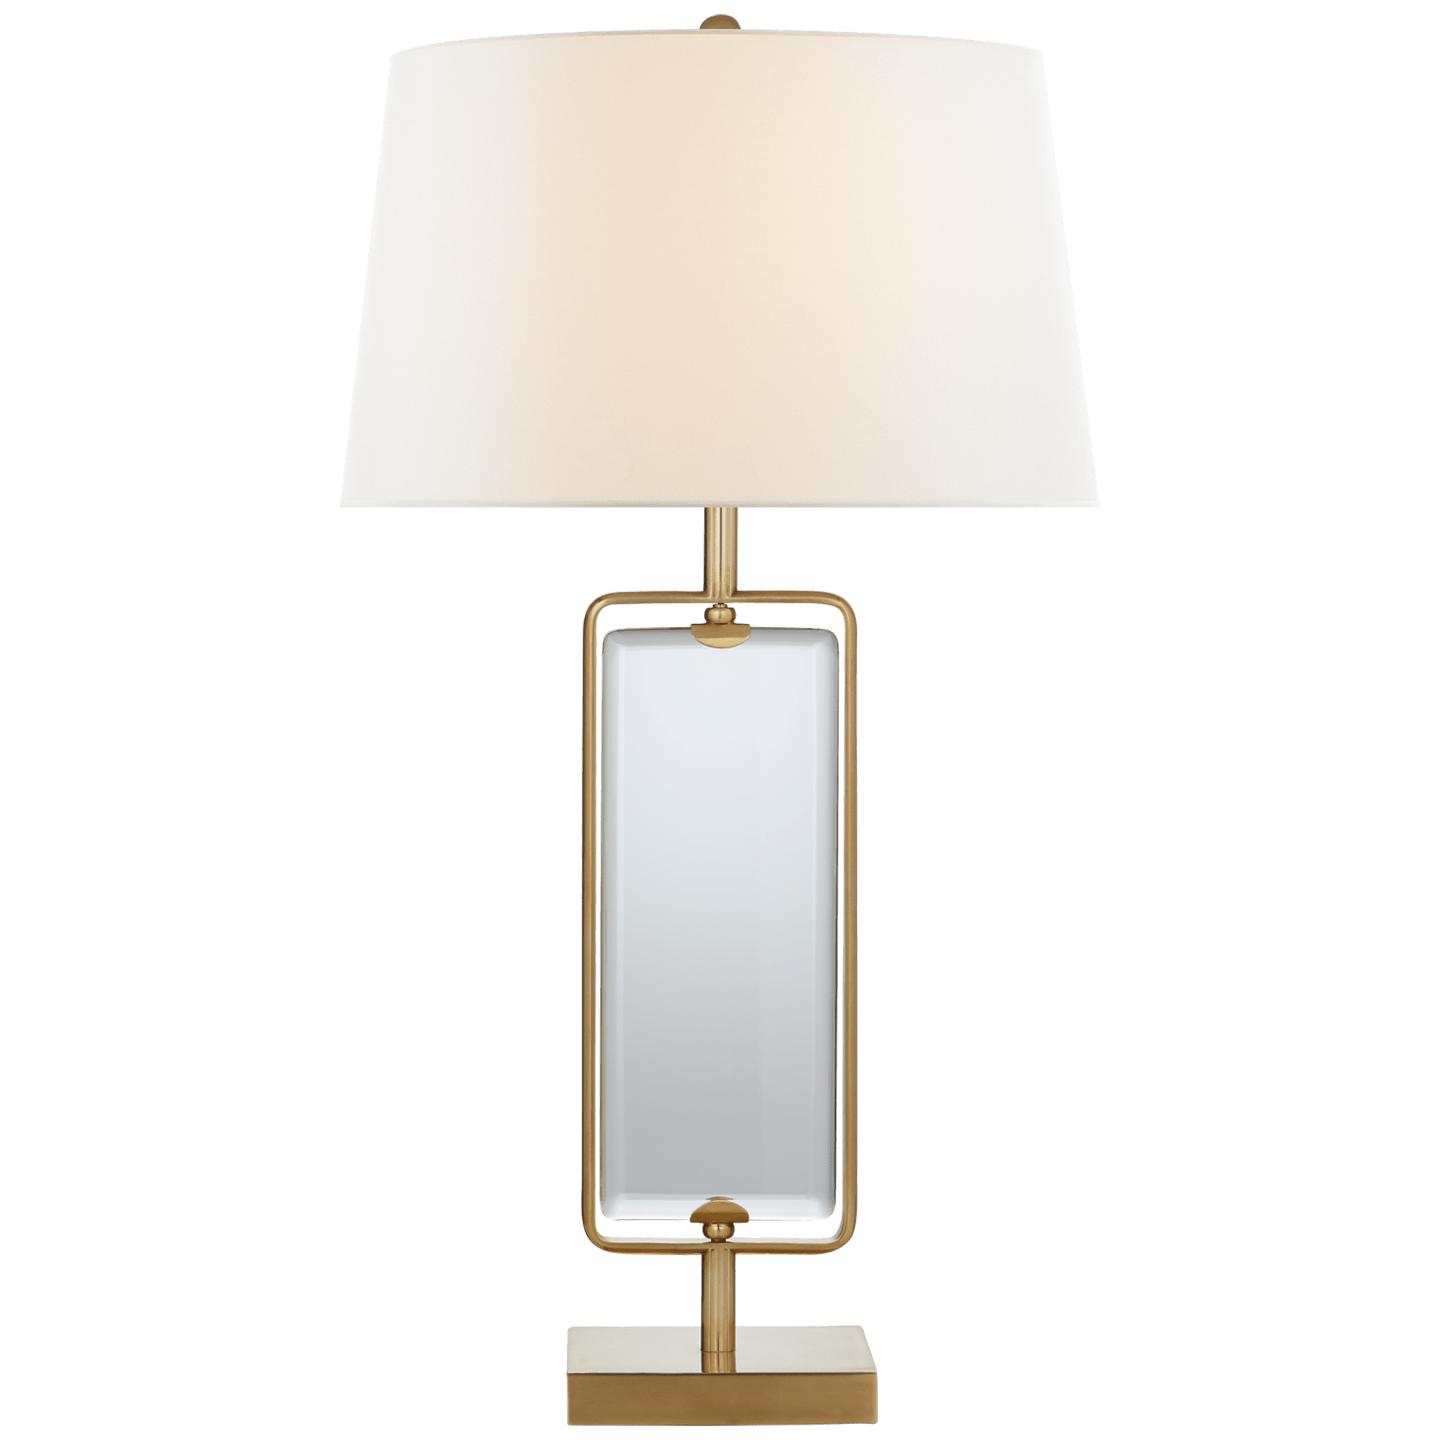 Купить Настольная лампа Henri Large Framed Table Lamp в интернет-магазине roooms.ru